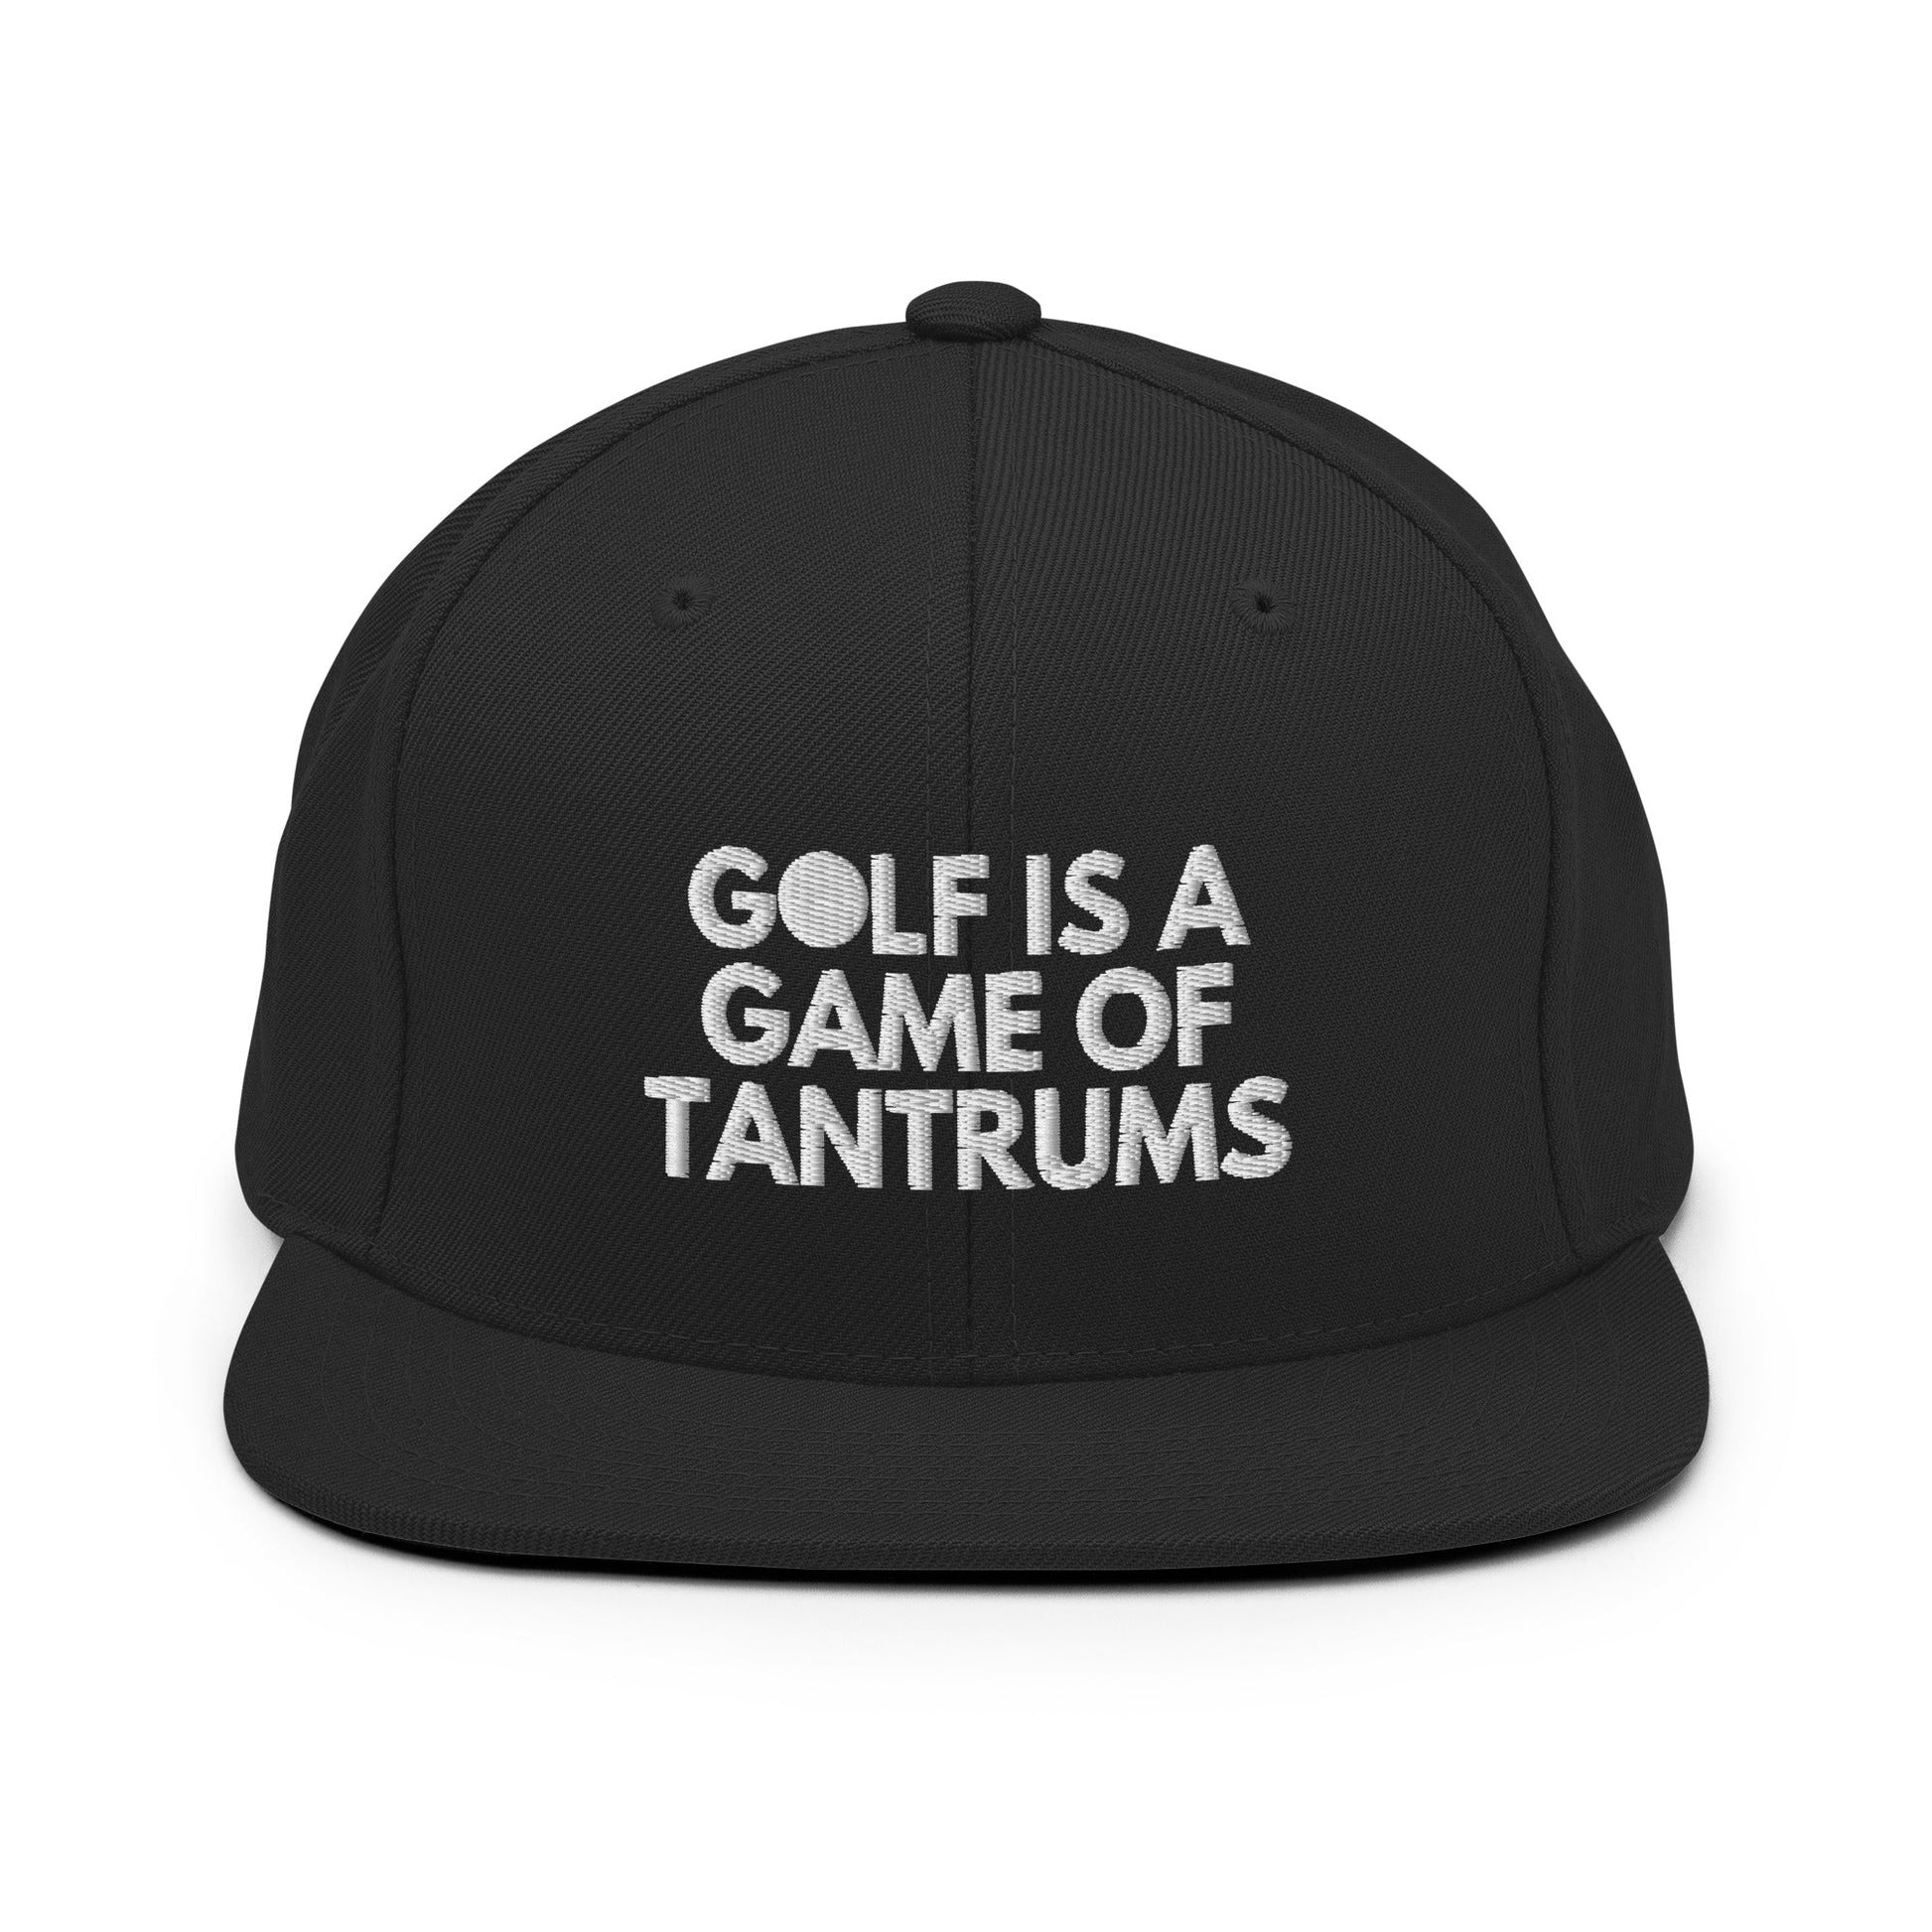 Funny Golfer Gifts  Snapback Hat Black Golf Is A Game Of Tantrums Hat Snapback Hat